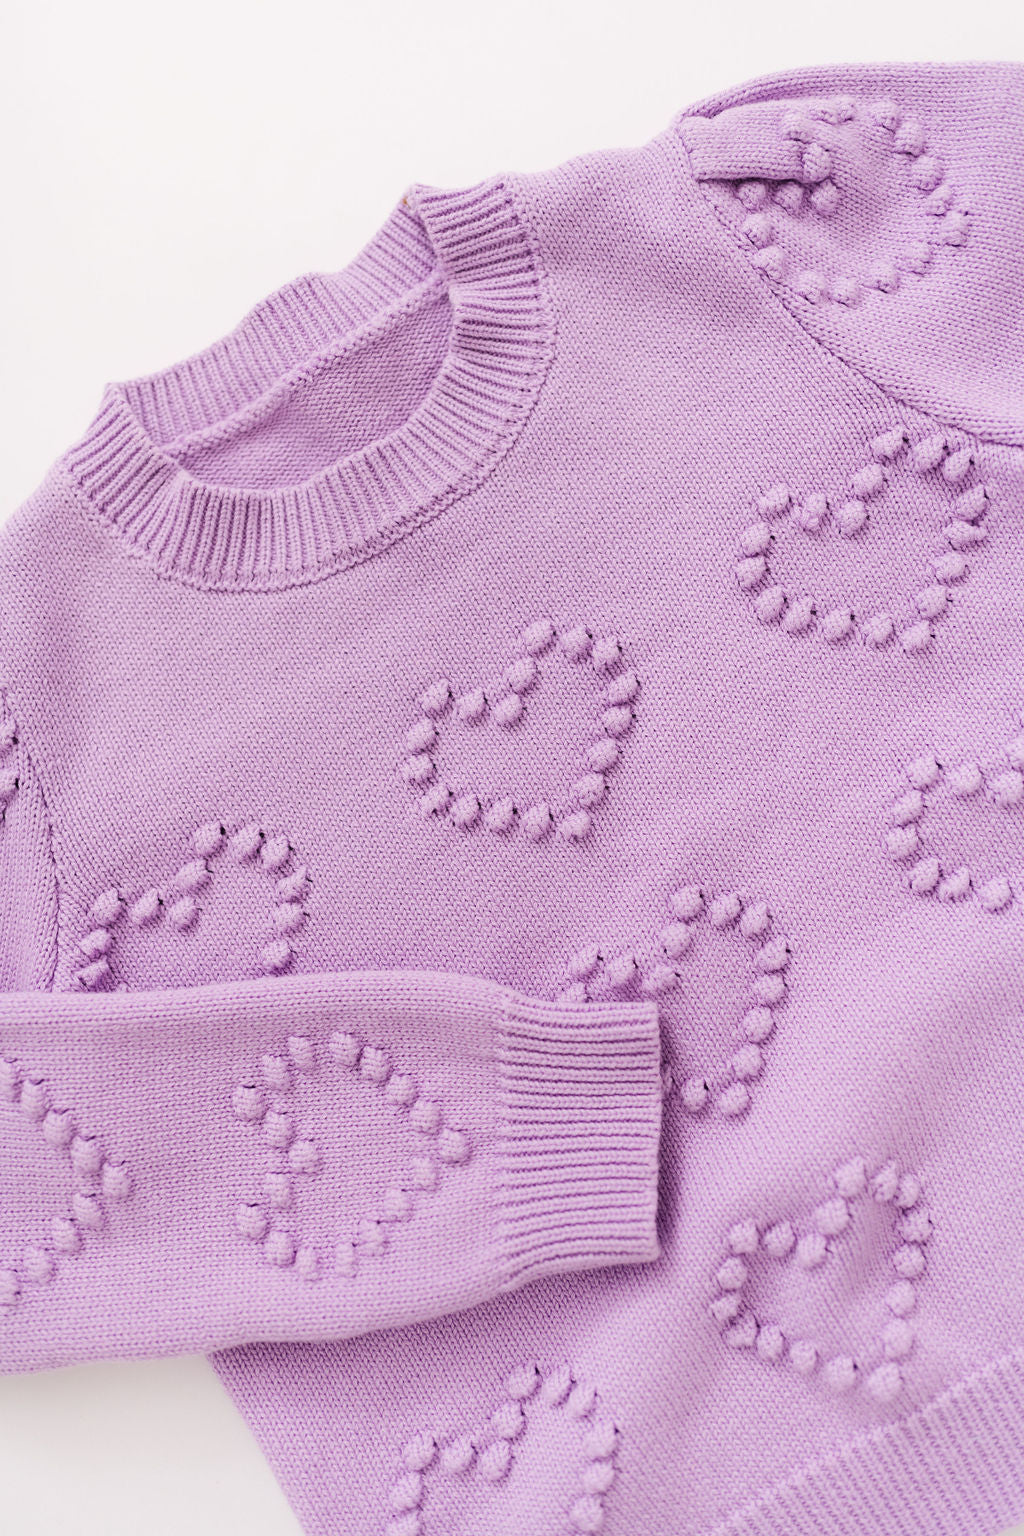 Heart Puff Sleeve Cotton Pullover in Crocus Petal Purple